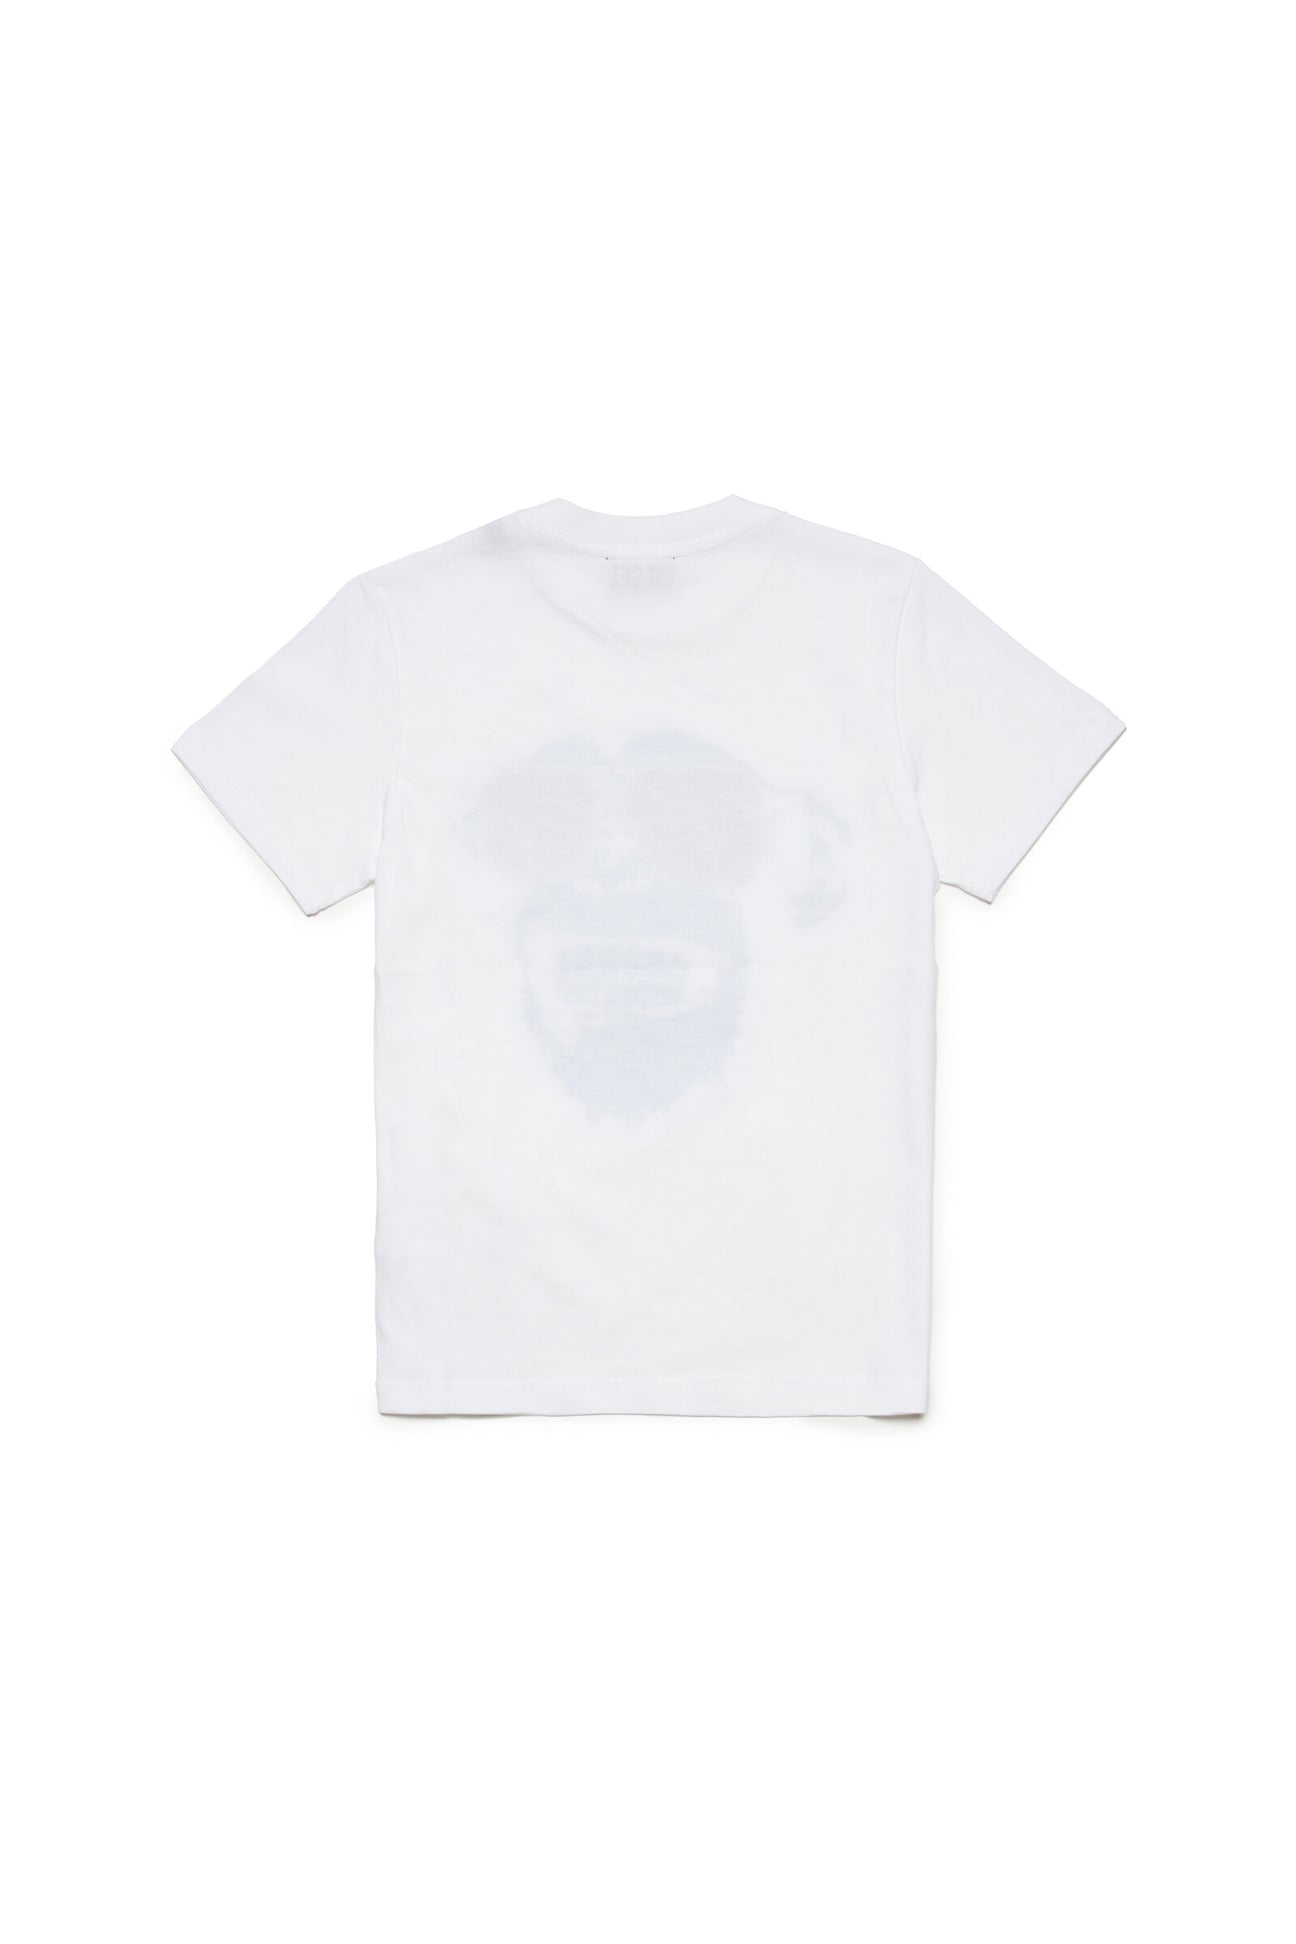 White t-shirt with metallic effect Monkey print White t-shirt with metallic effect Monkey print